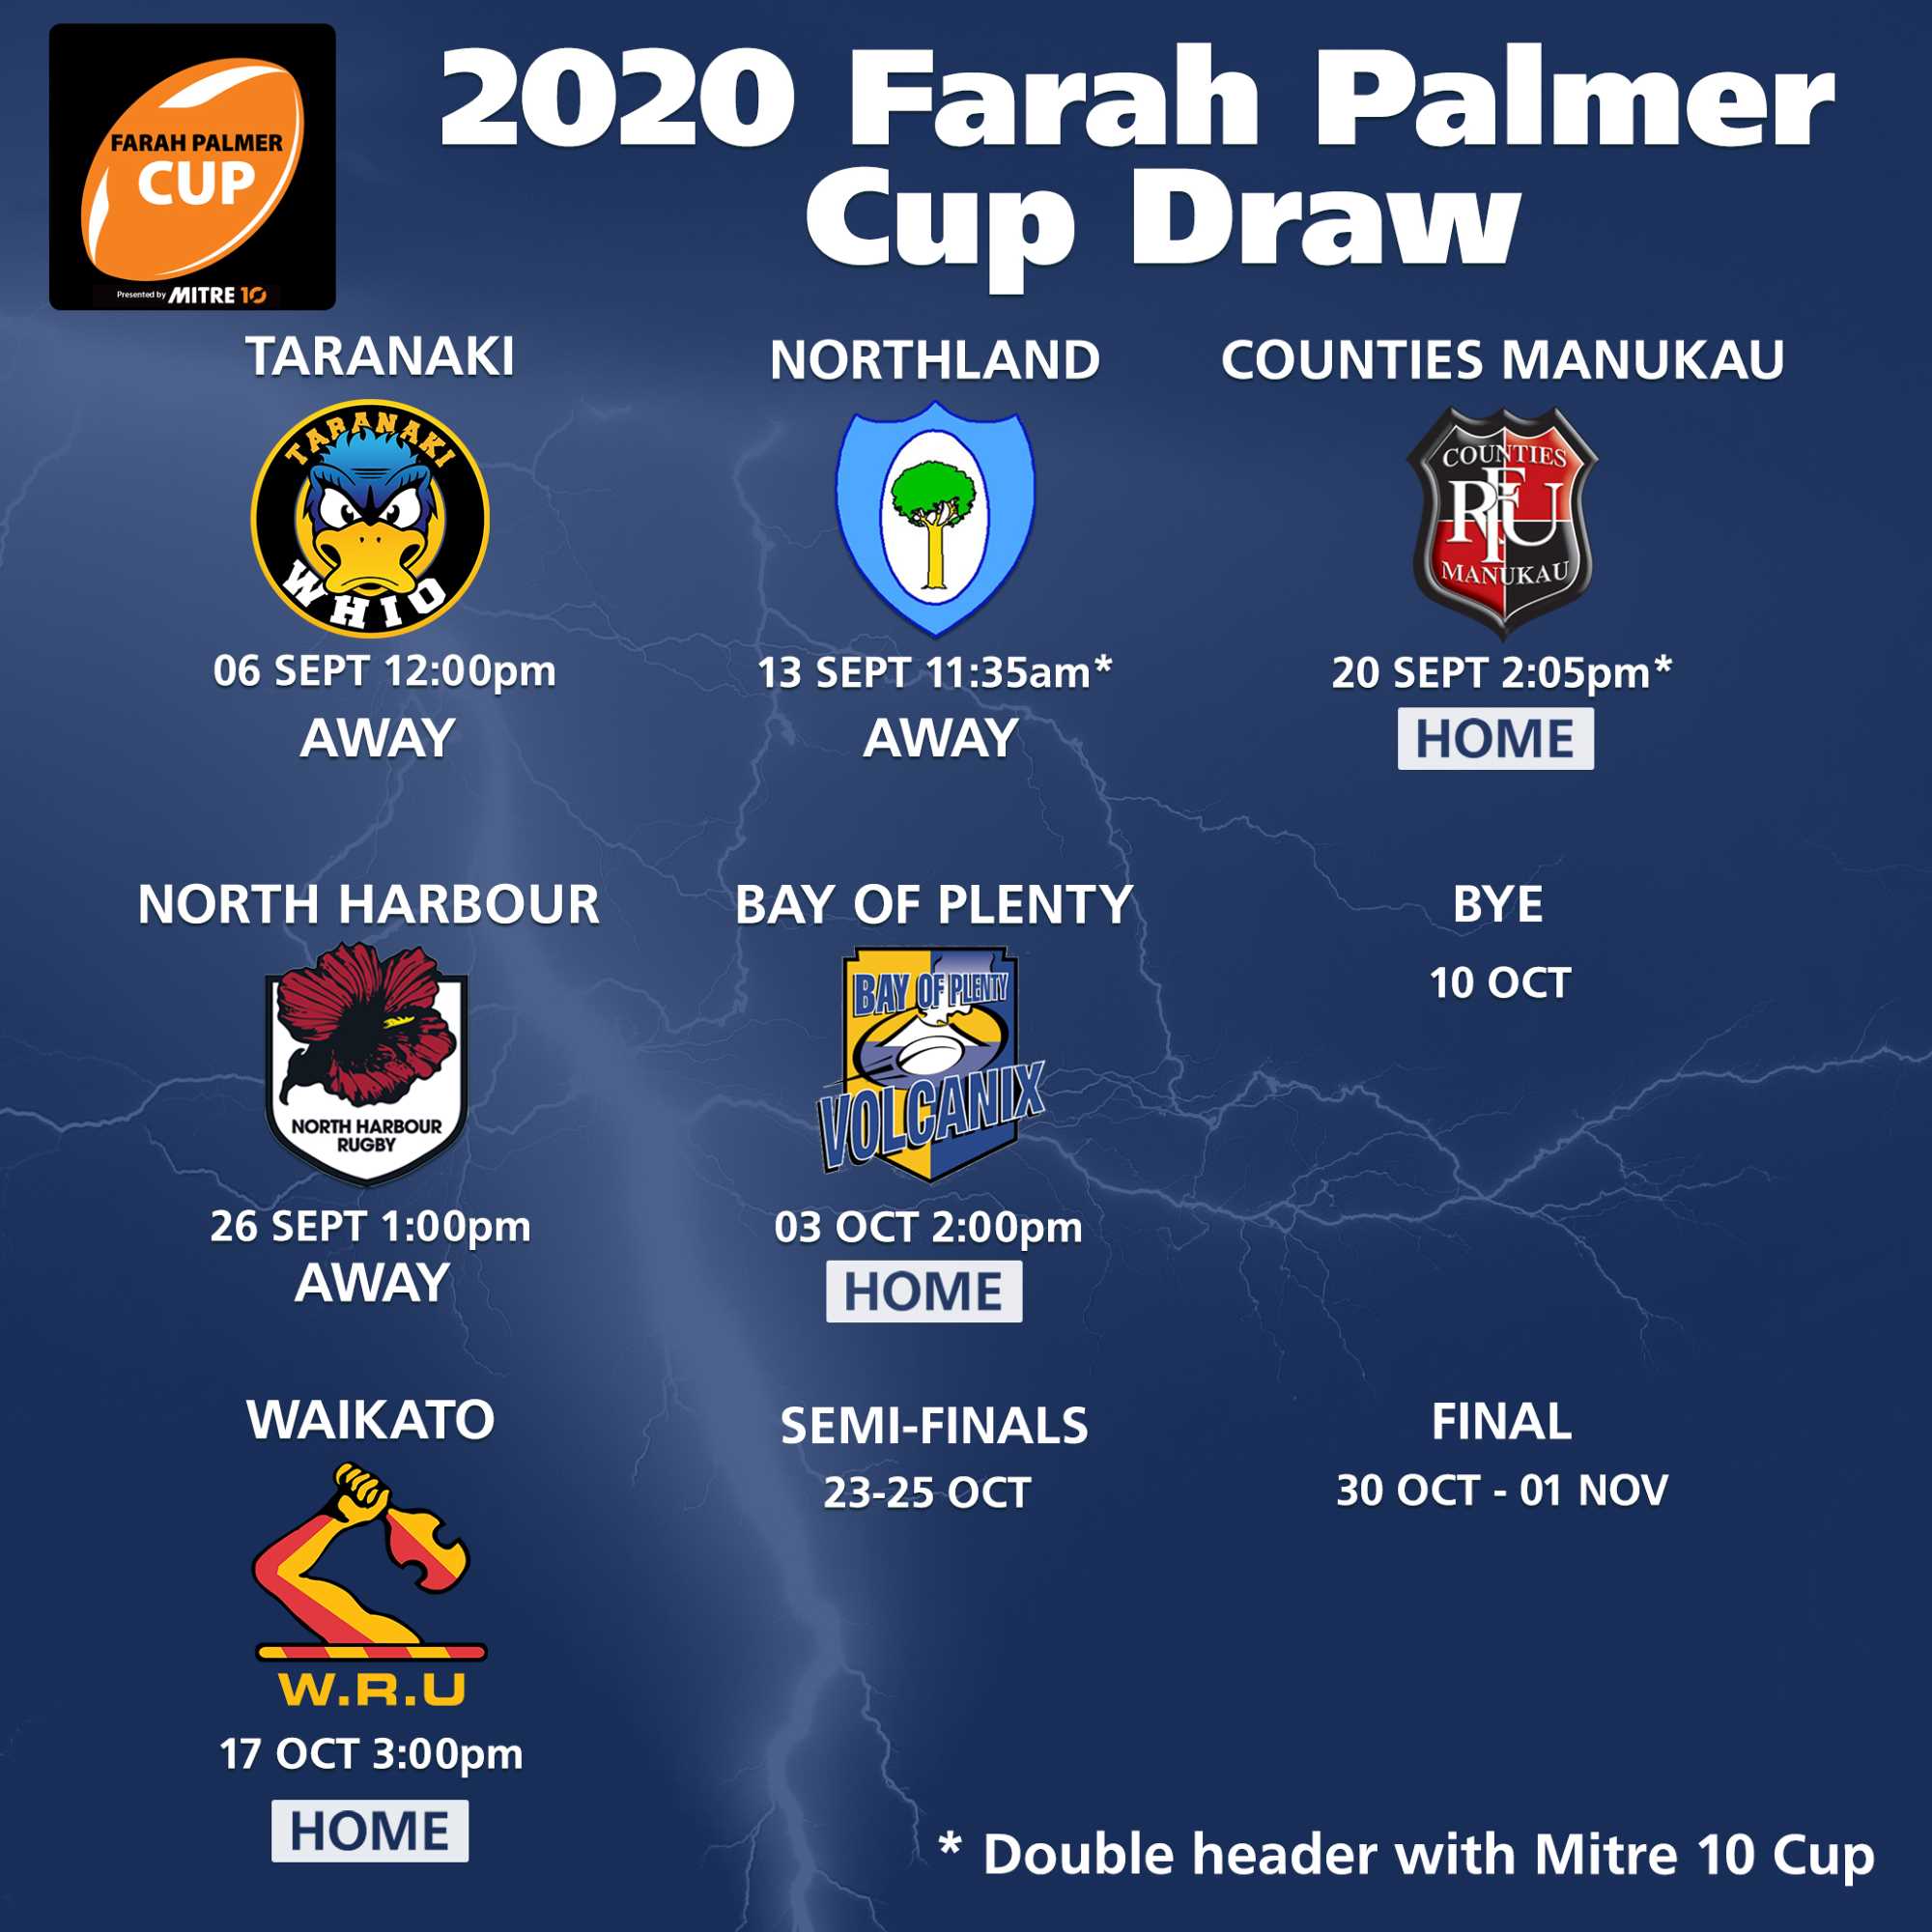 New Farah Palmer Cup start date confirmed